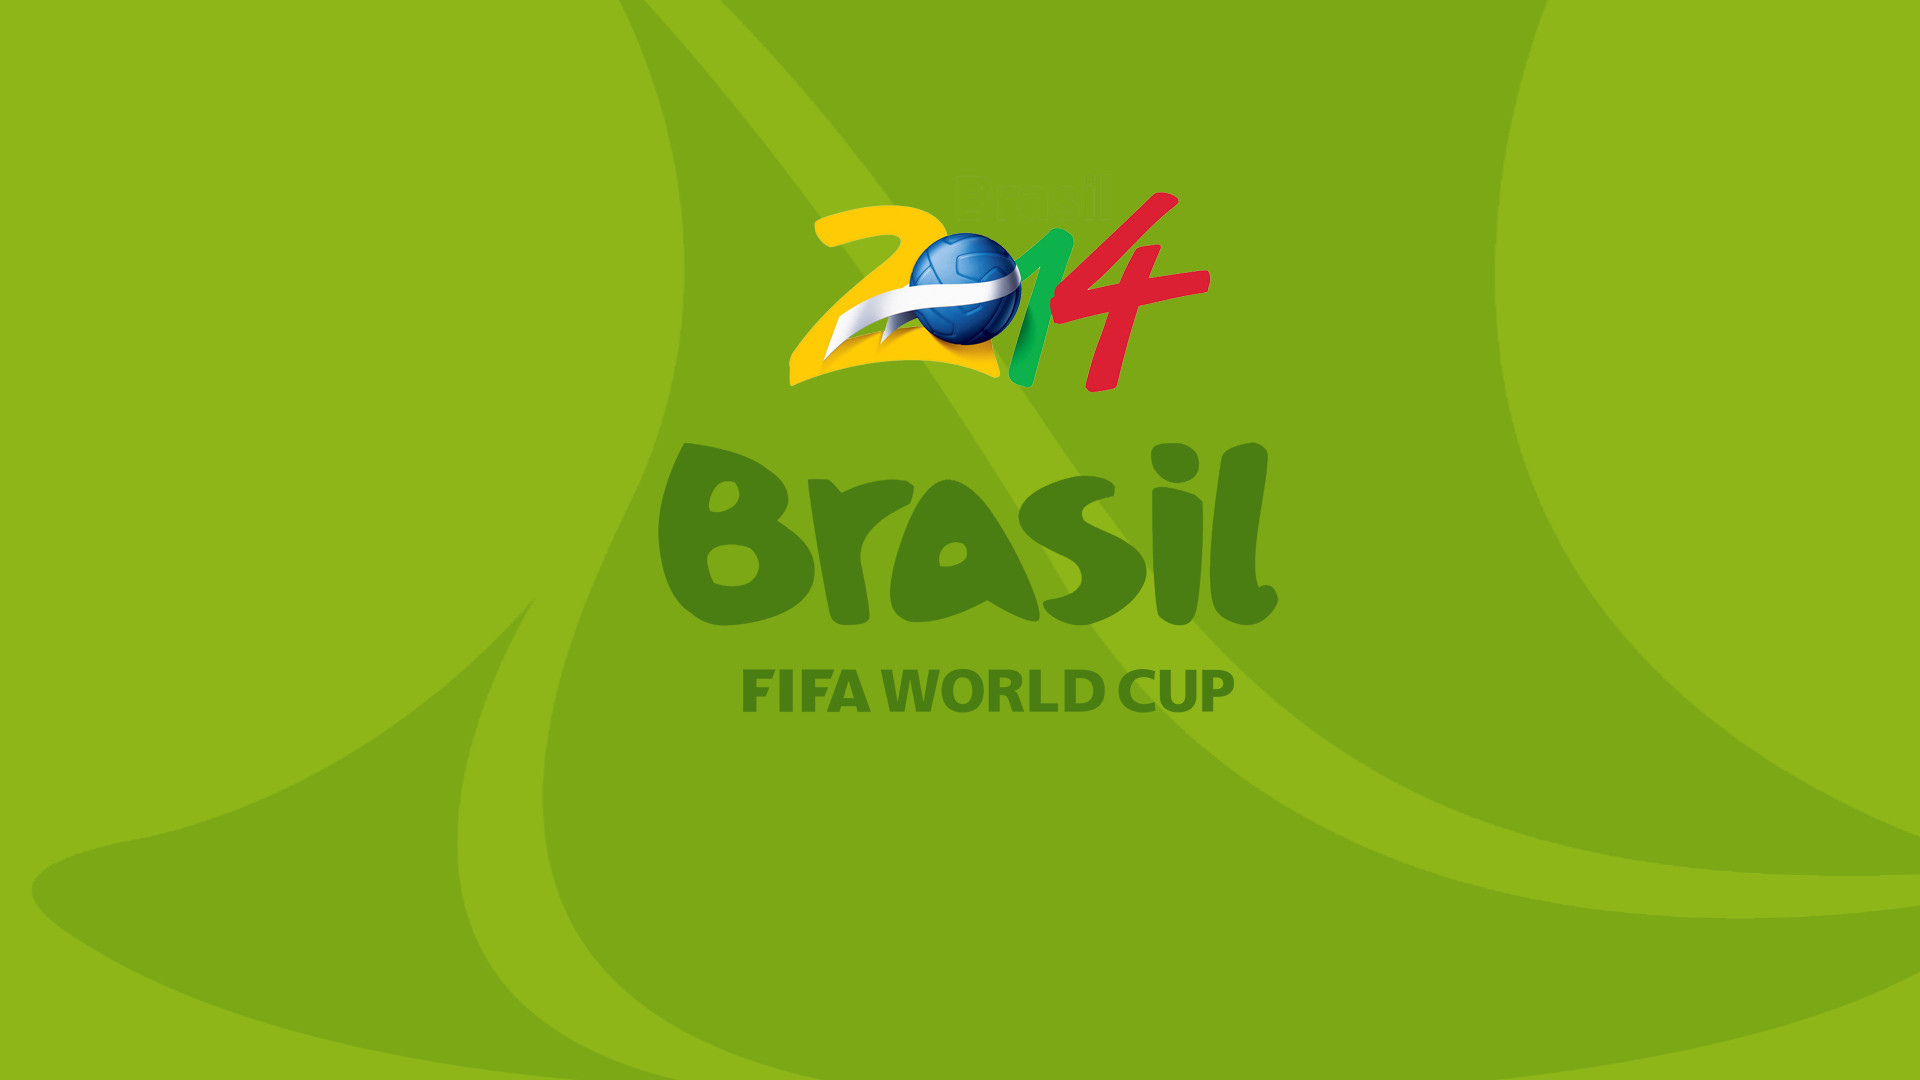 бразилия, чемпионат, 2014